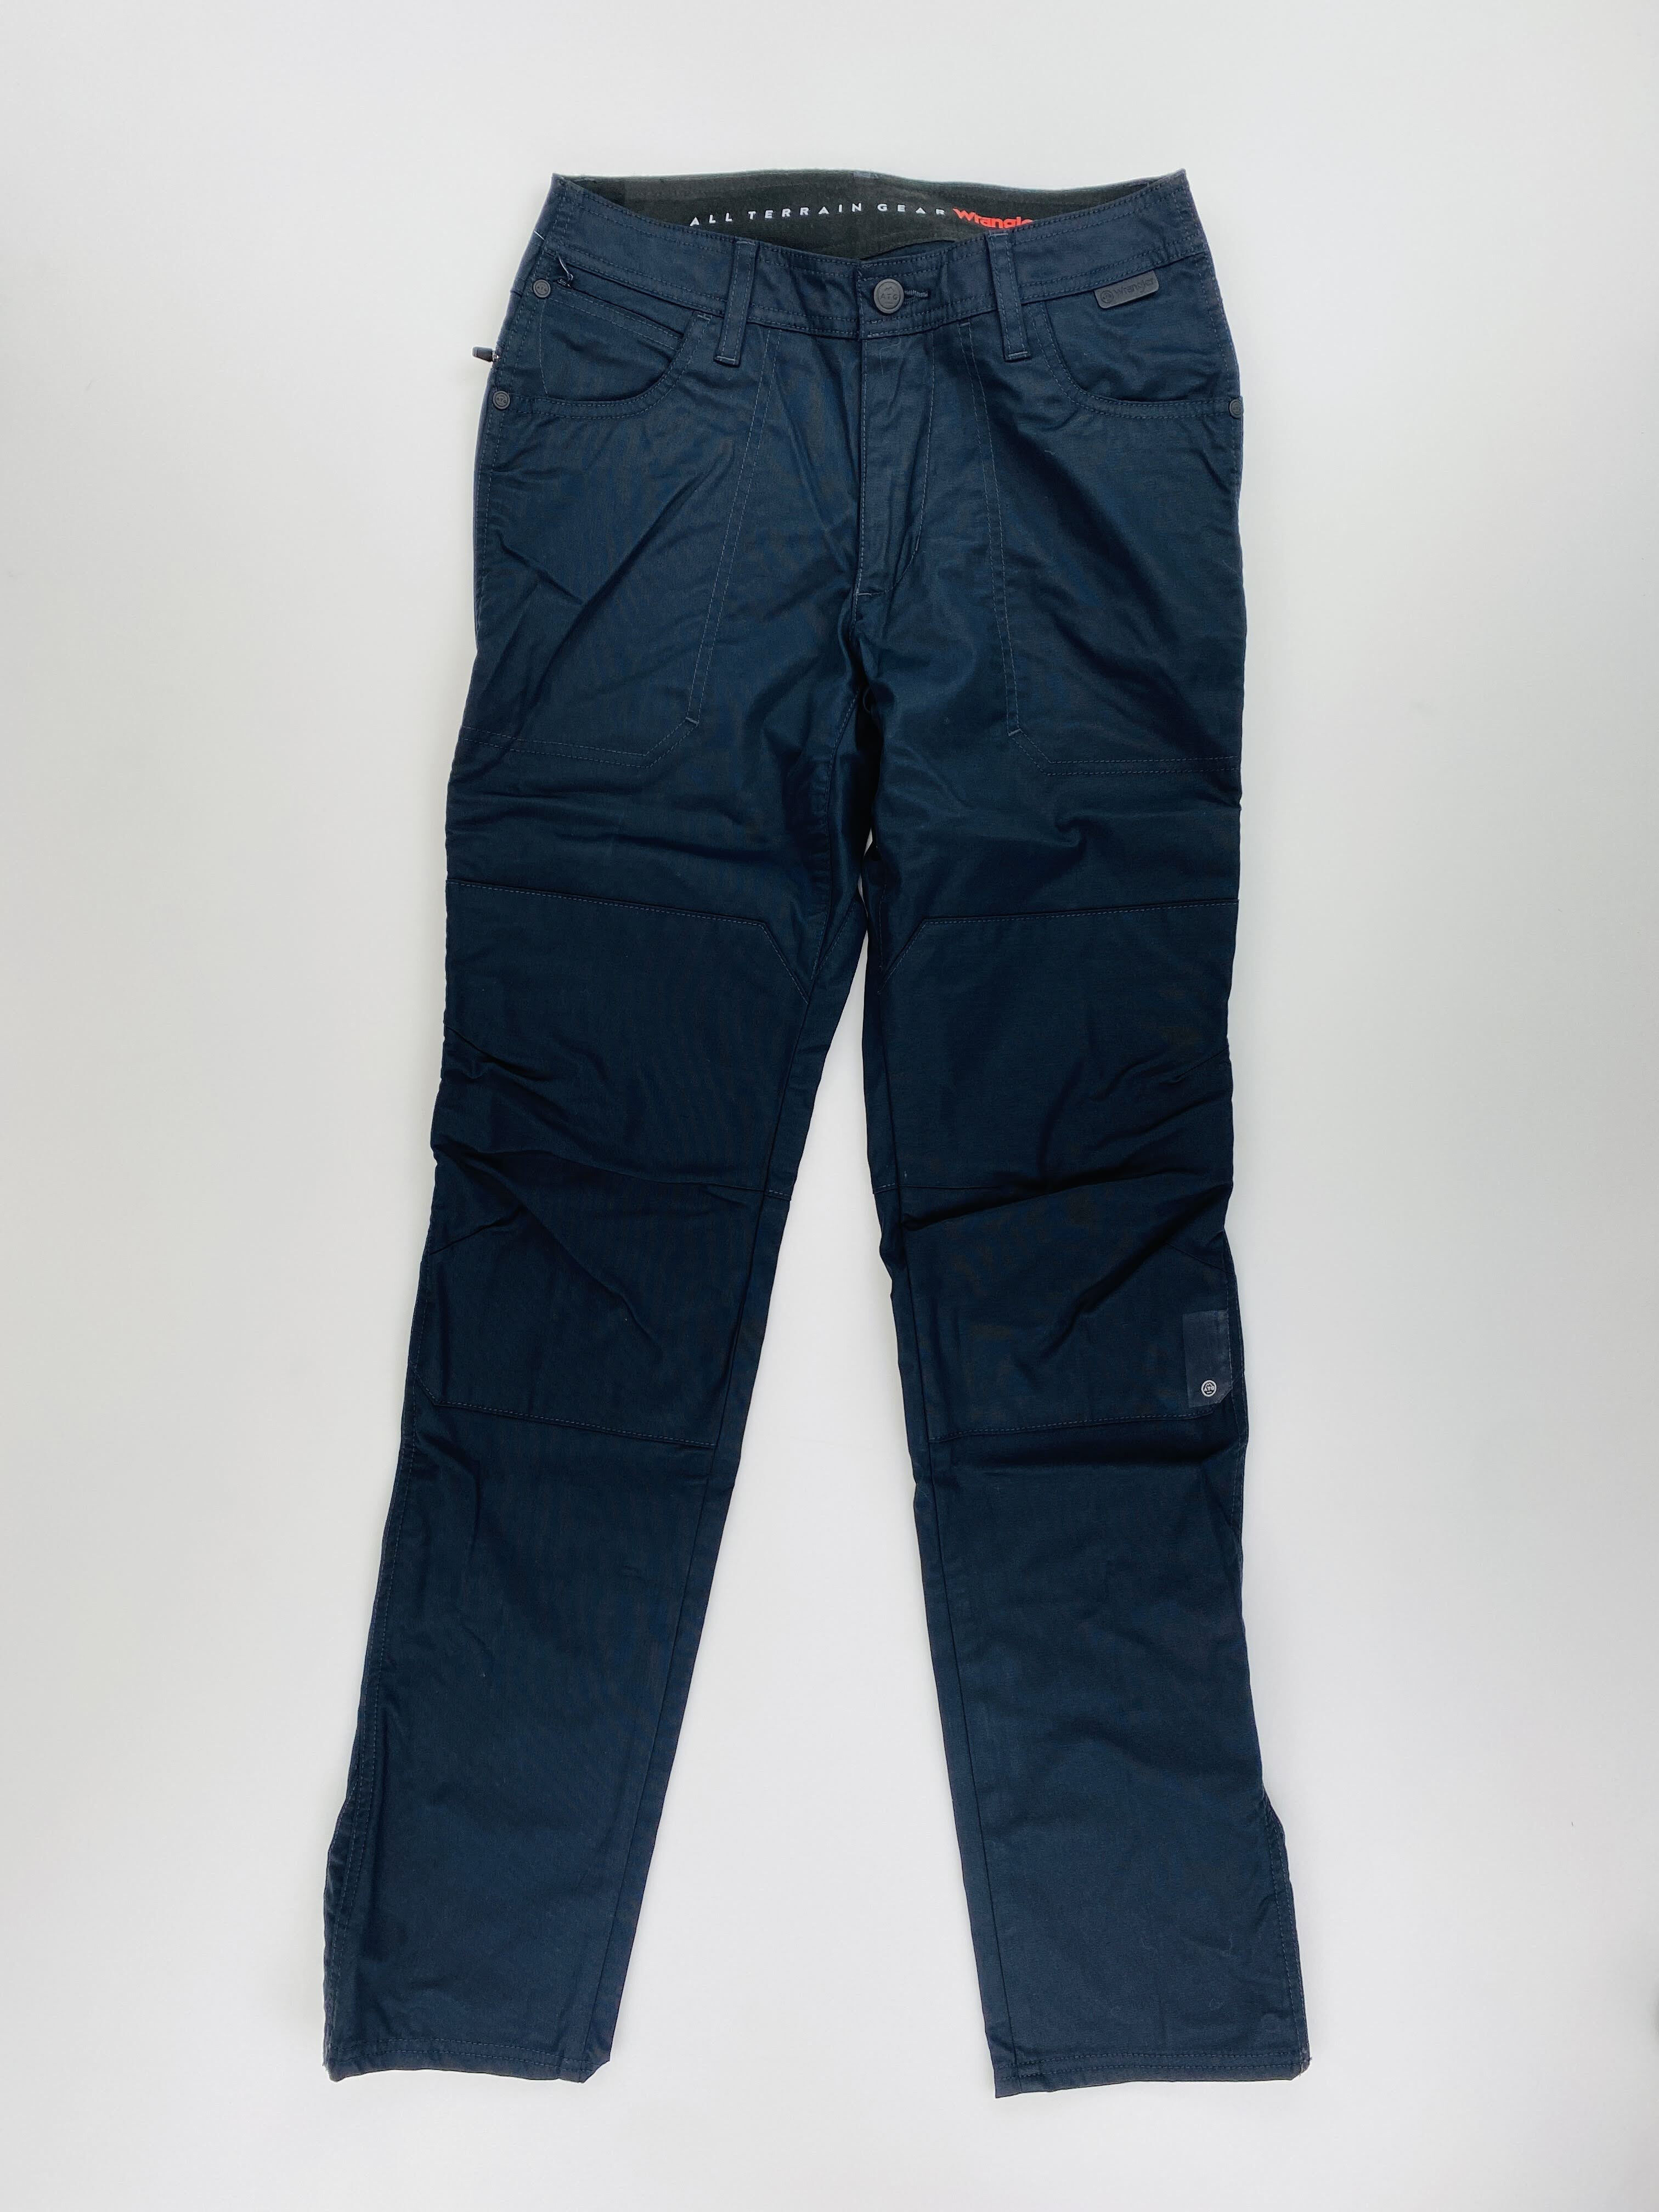 Wrangler Reinforced Softshell Pant - Seconde main Pantalon randonnée femme - Noir - US 28 | Hardloop